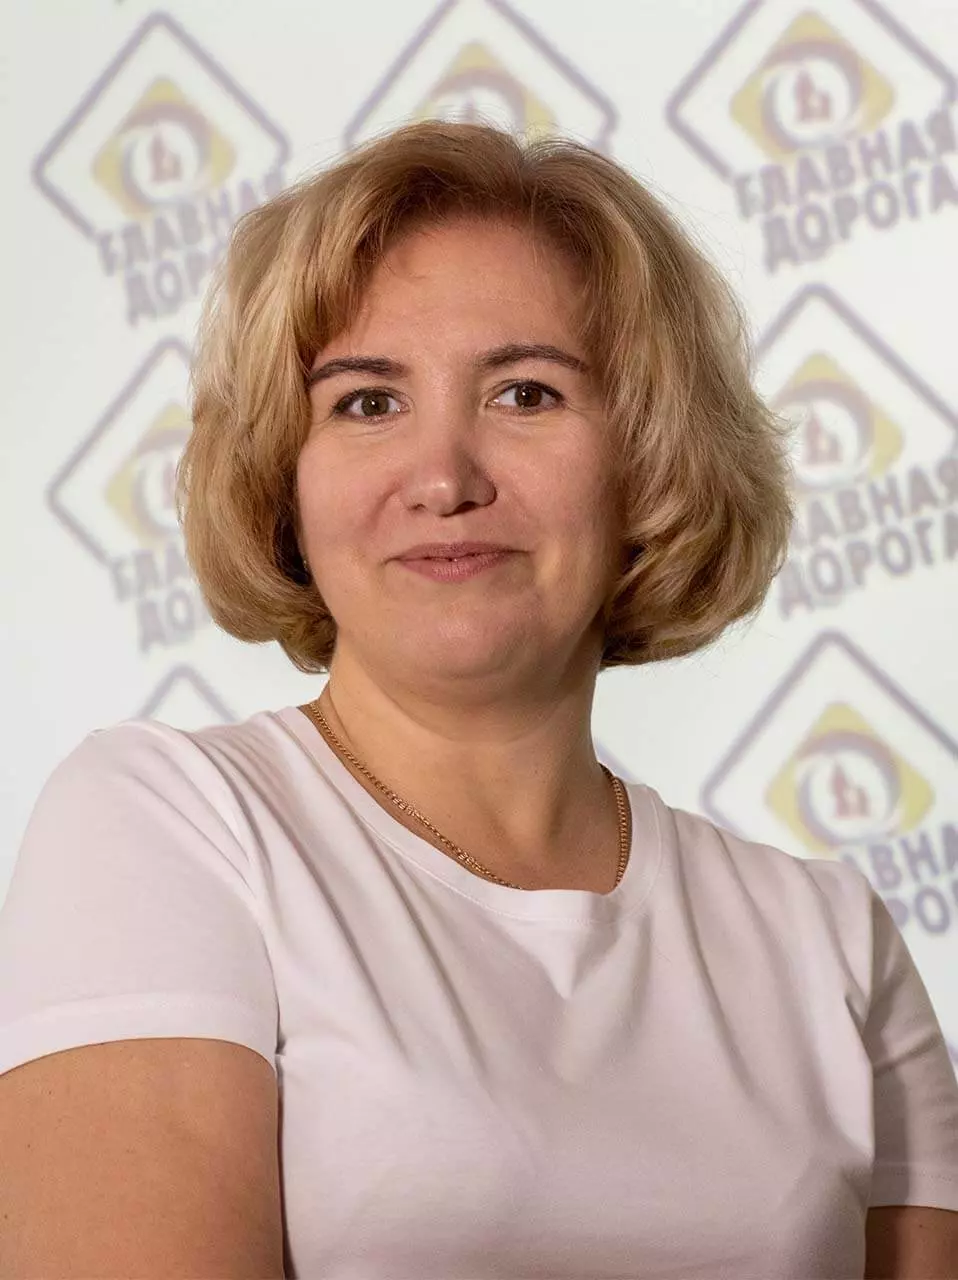 Марина Андреевна